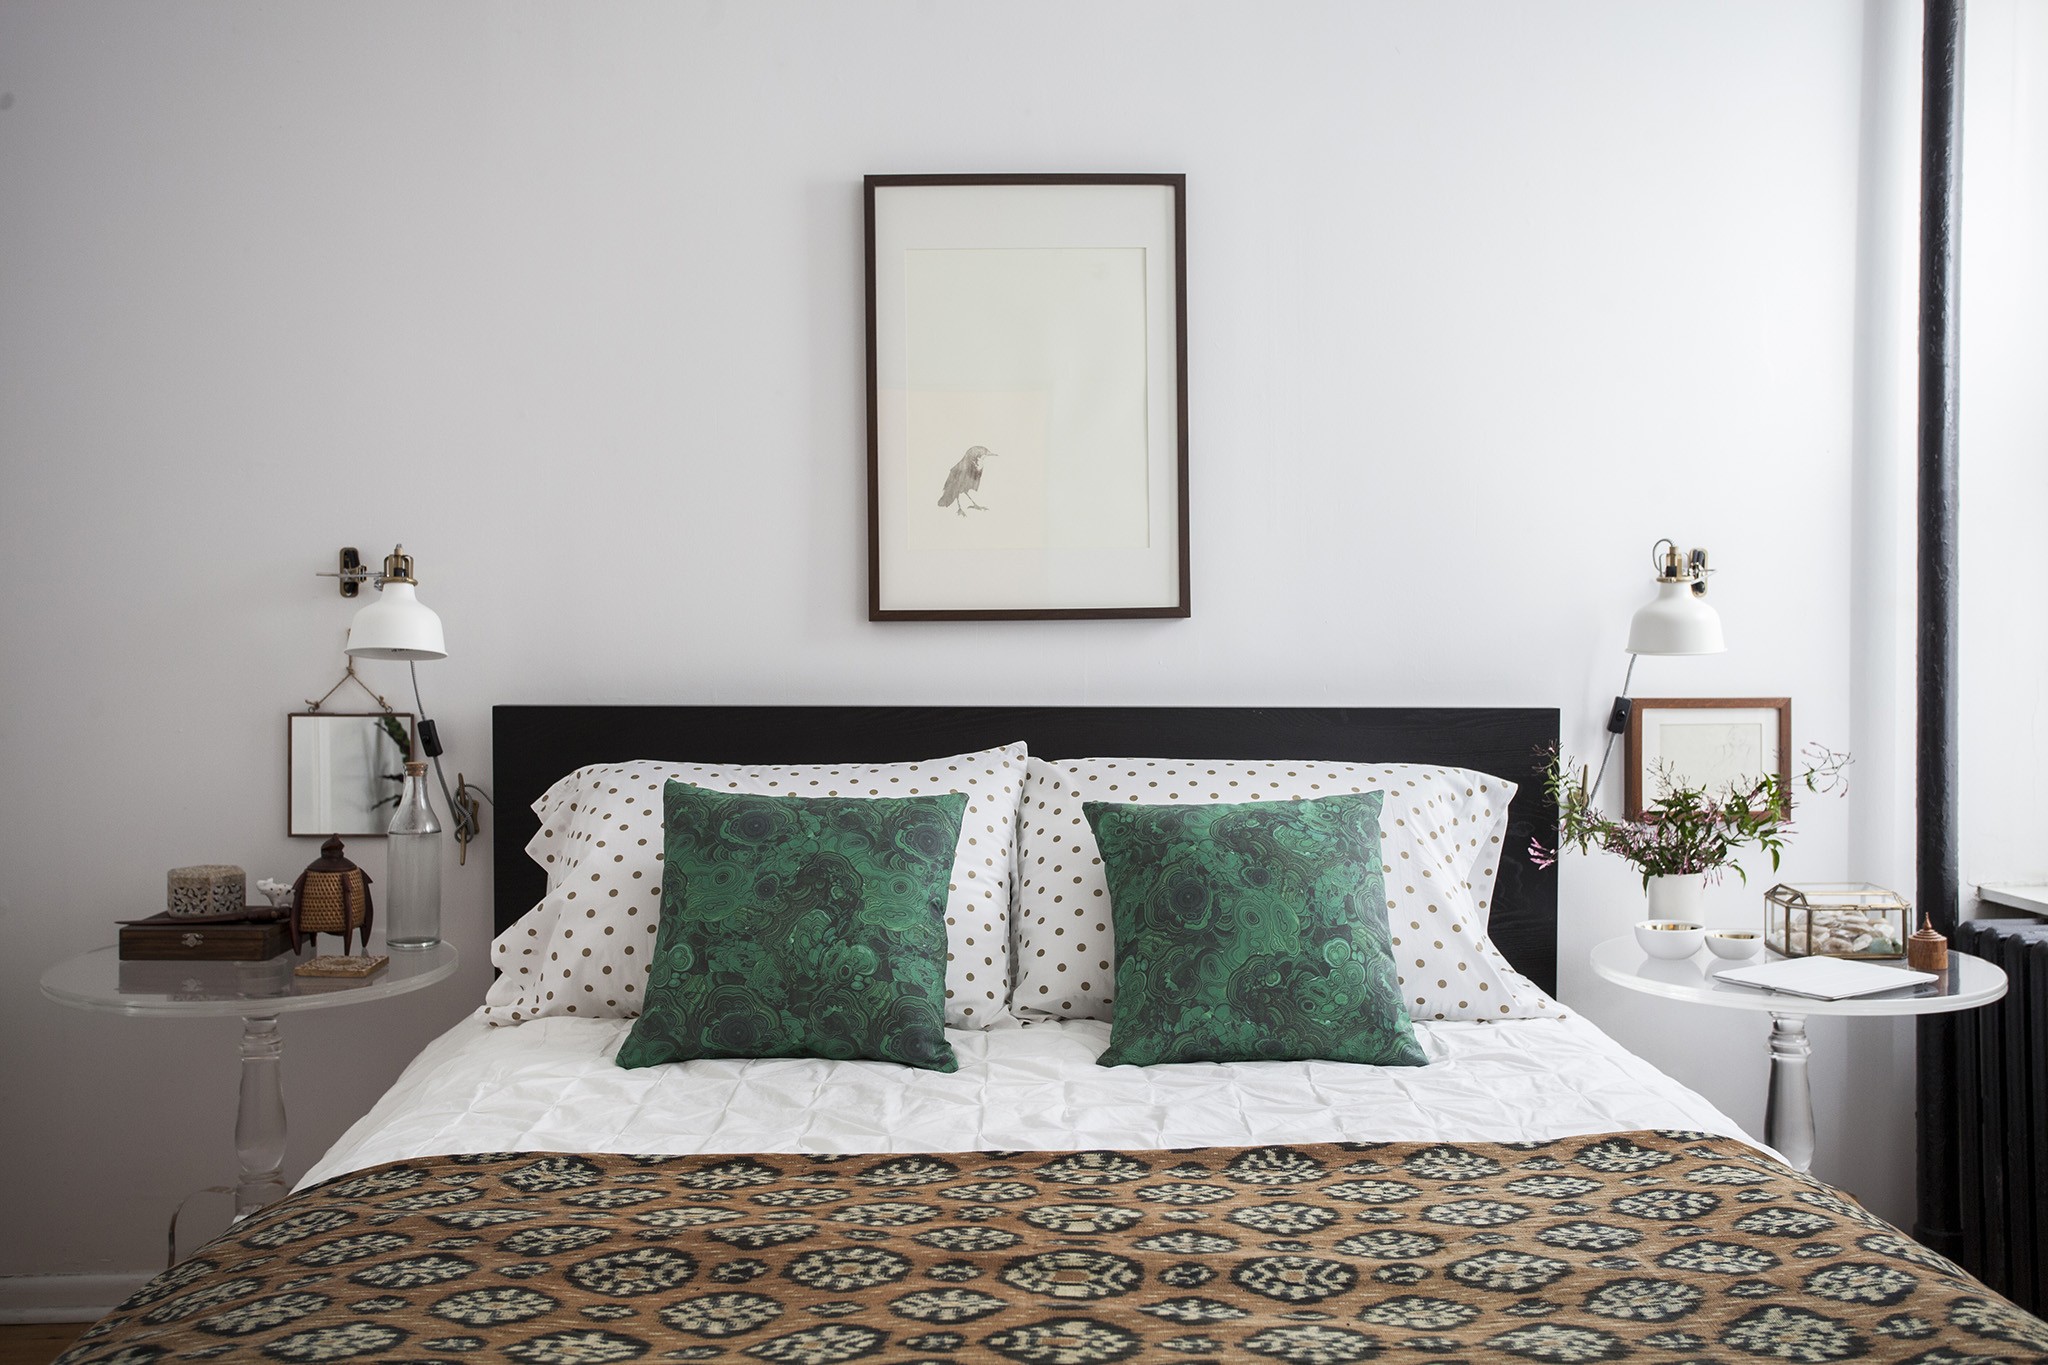 Malachite pillows neutral bedding traditional lucite bedside tables bird art